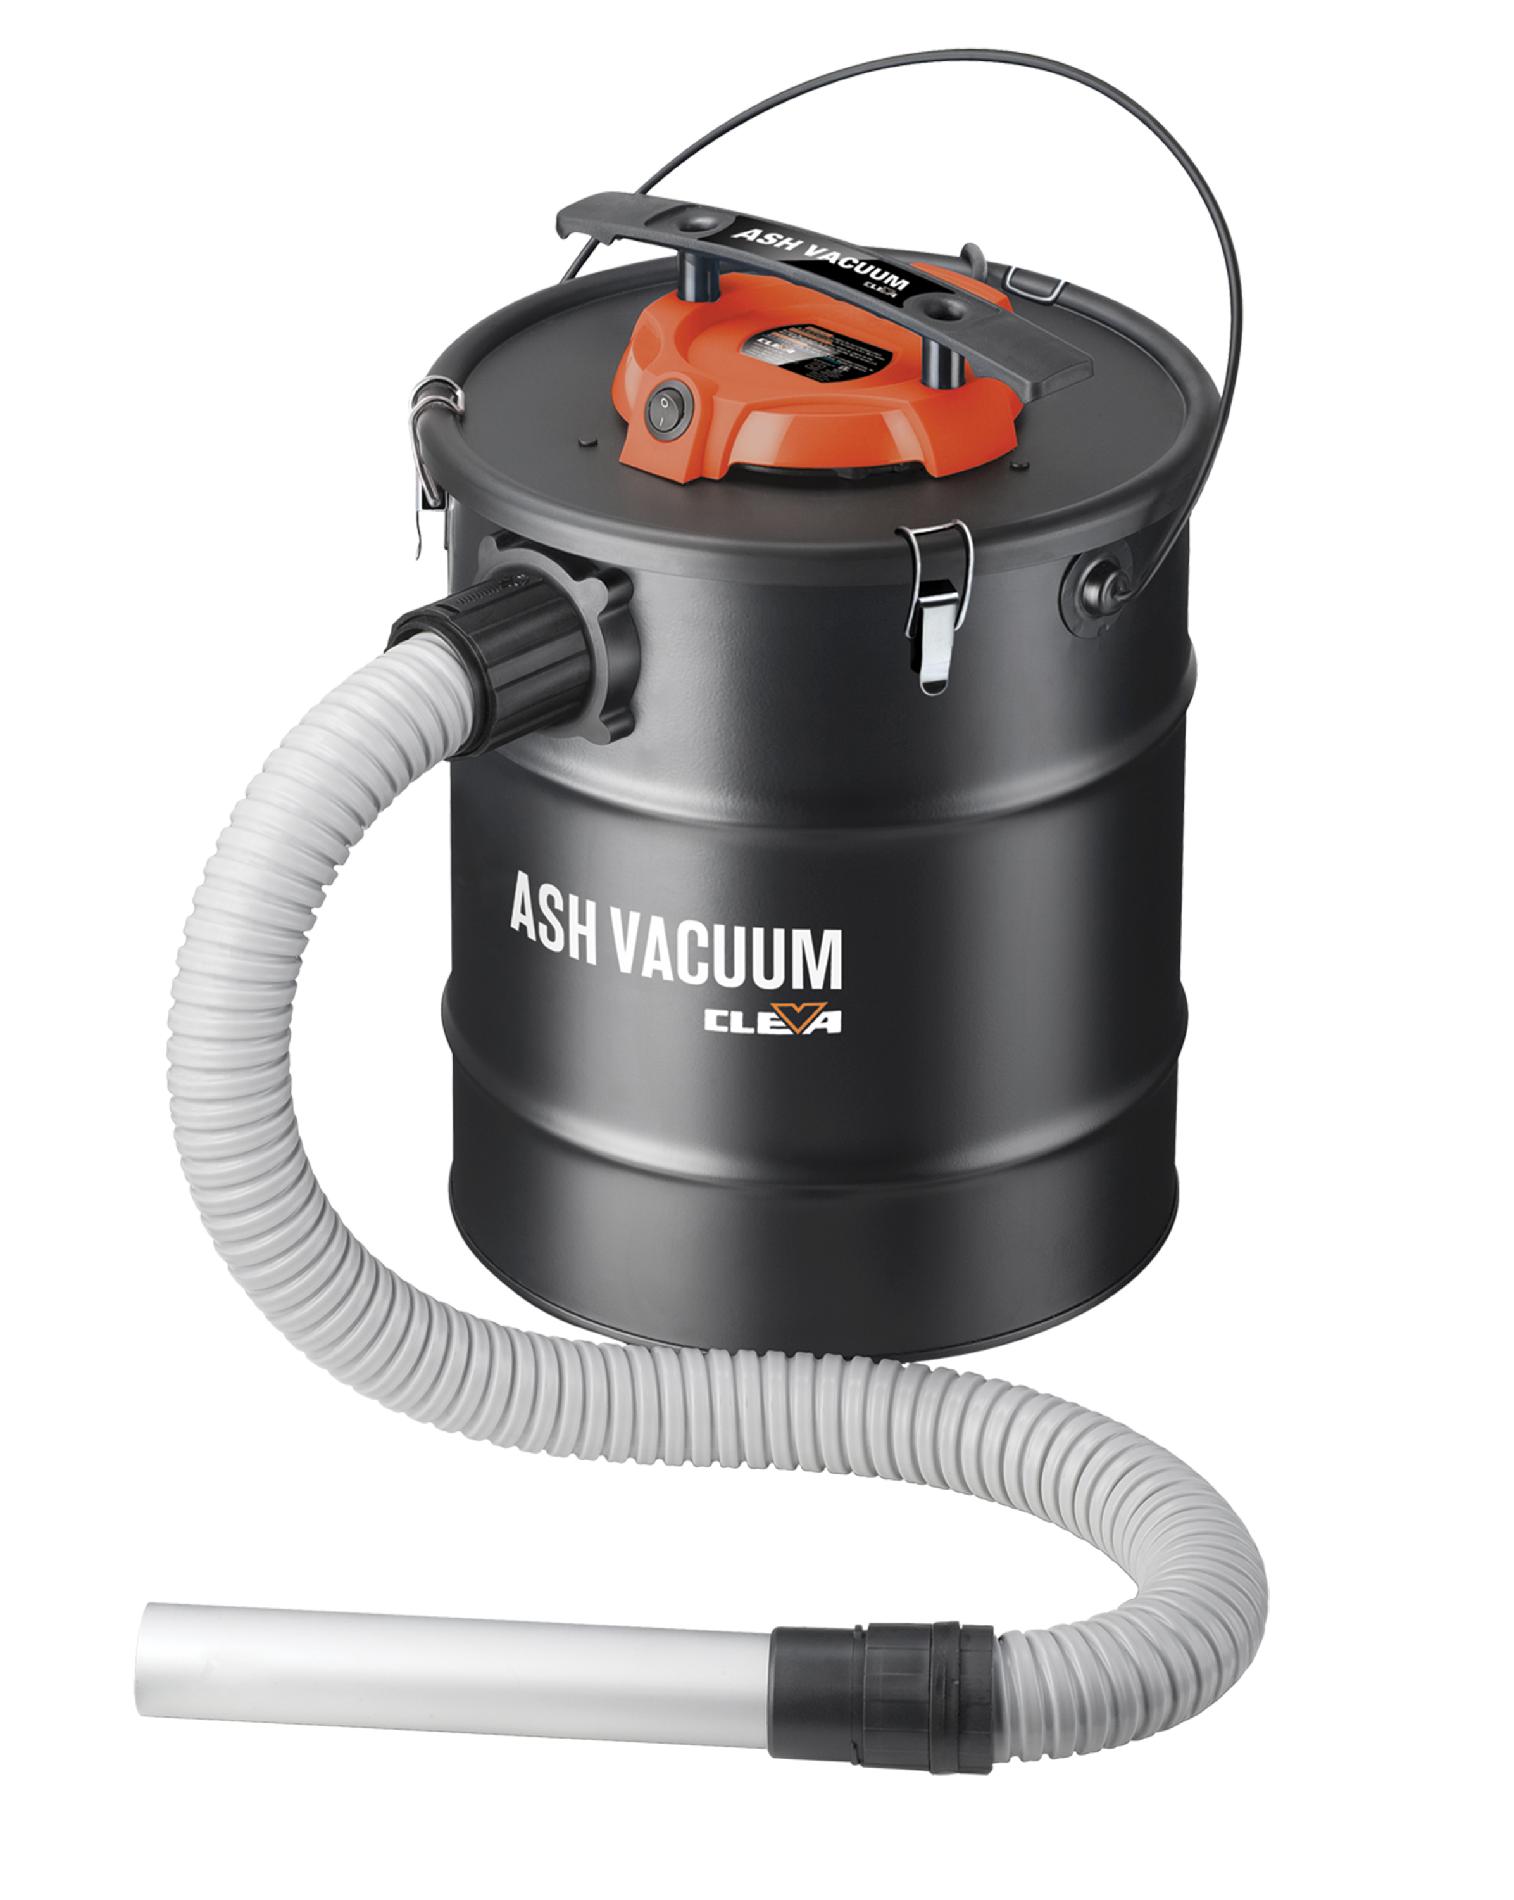 Cleva EAT606S Ash Vacuum